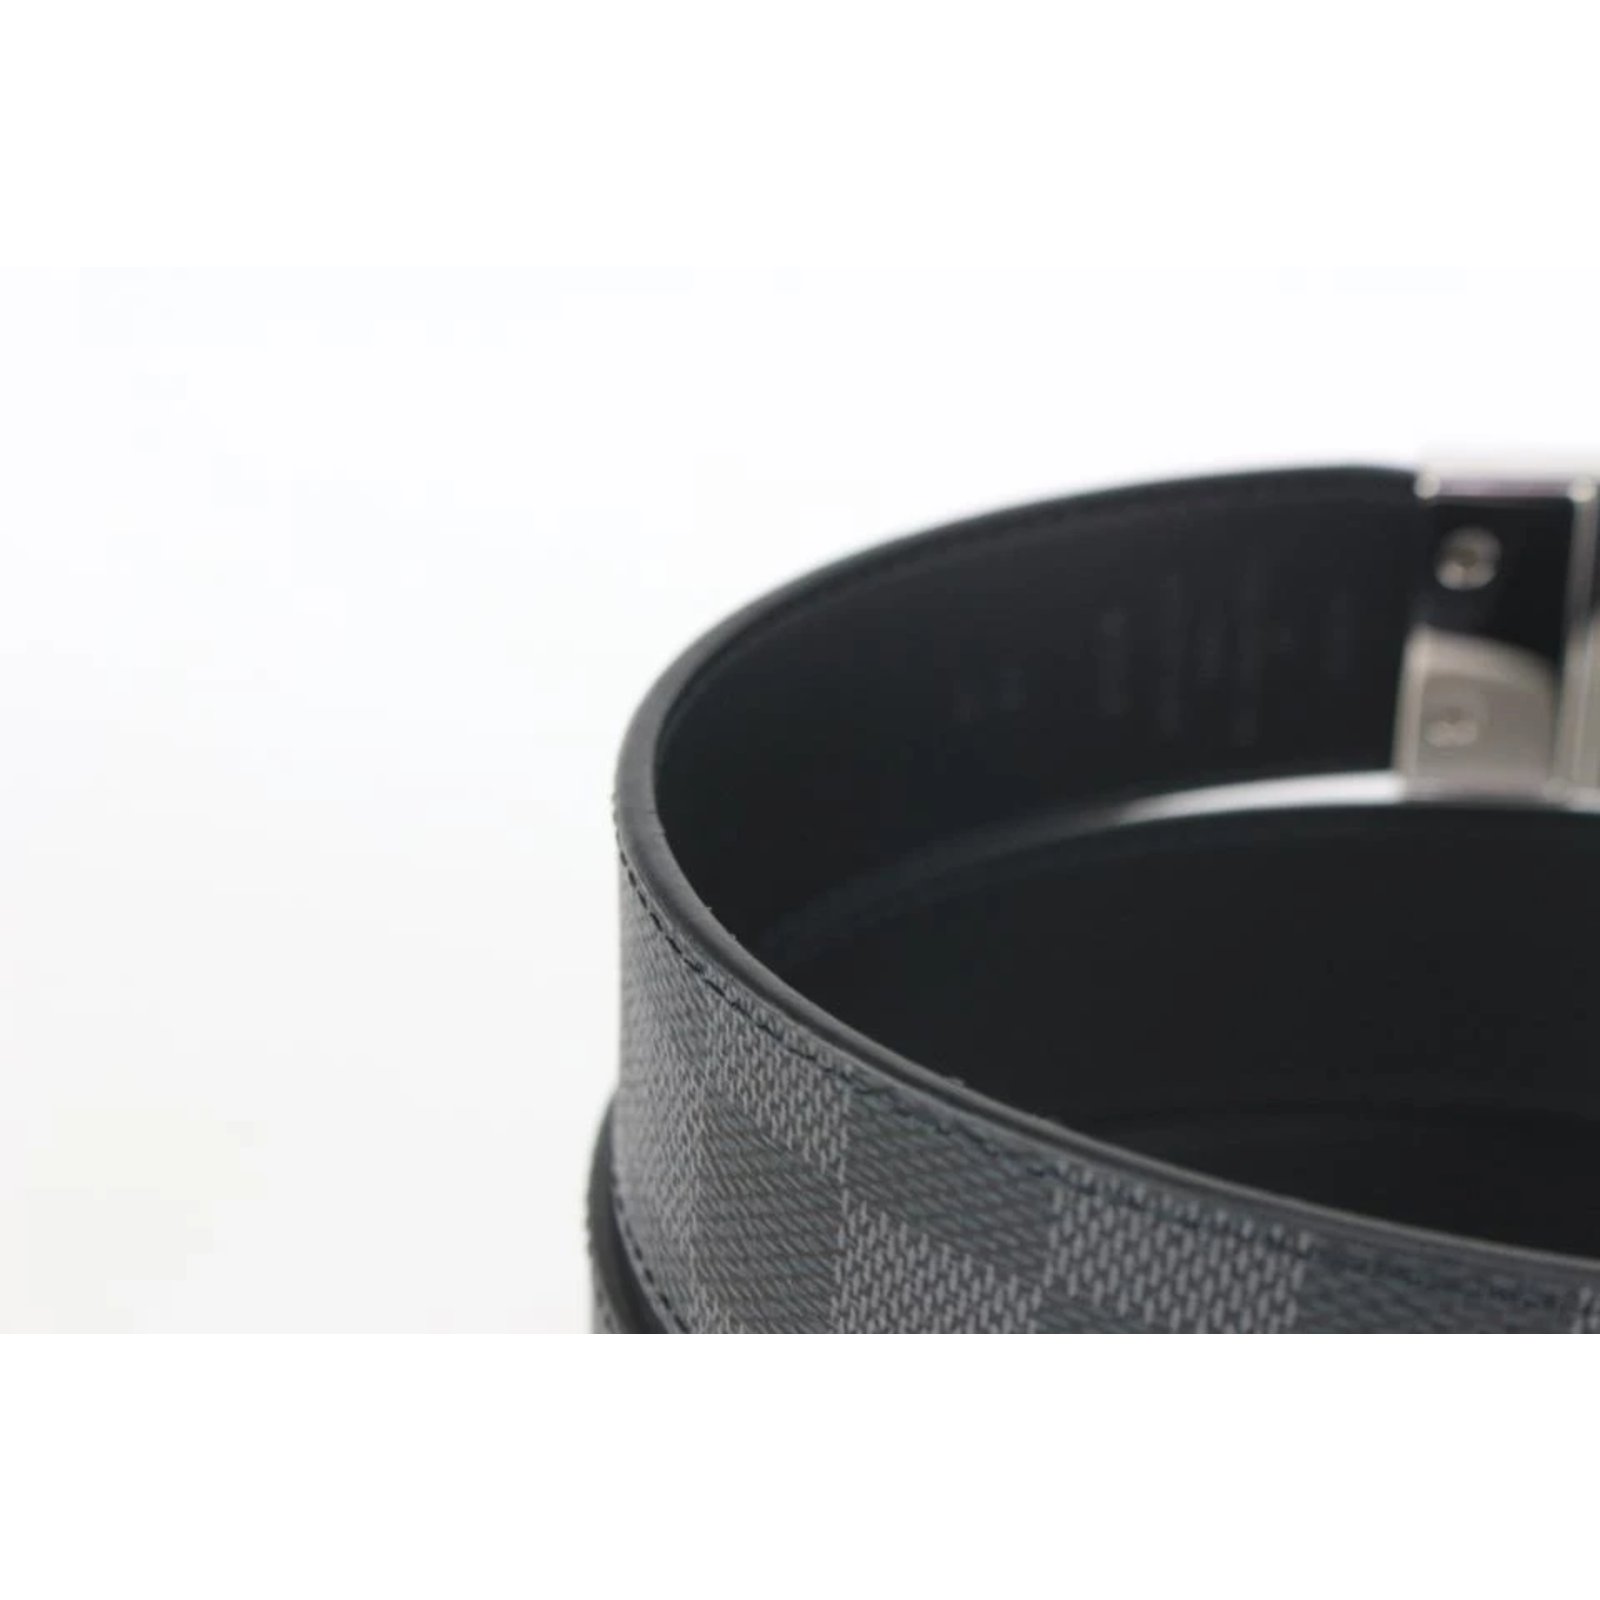 Louis Vuitton 90/36 Reversible Damier Graphite 35mm Slender Belt